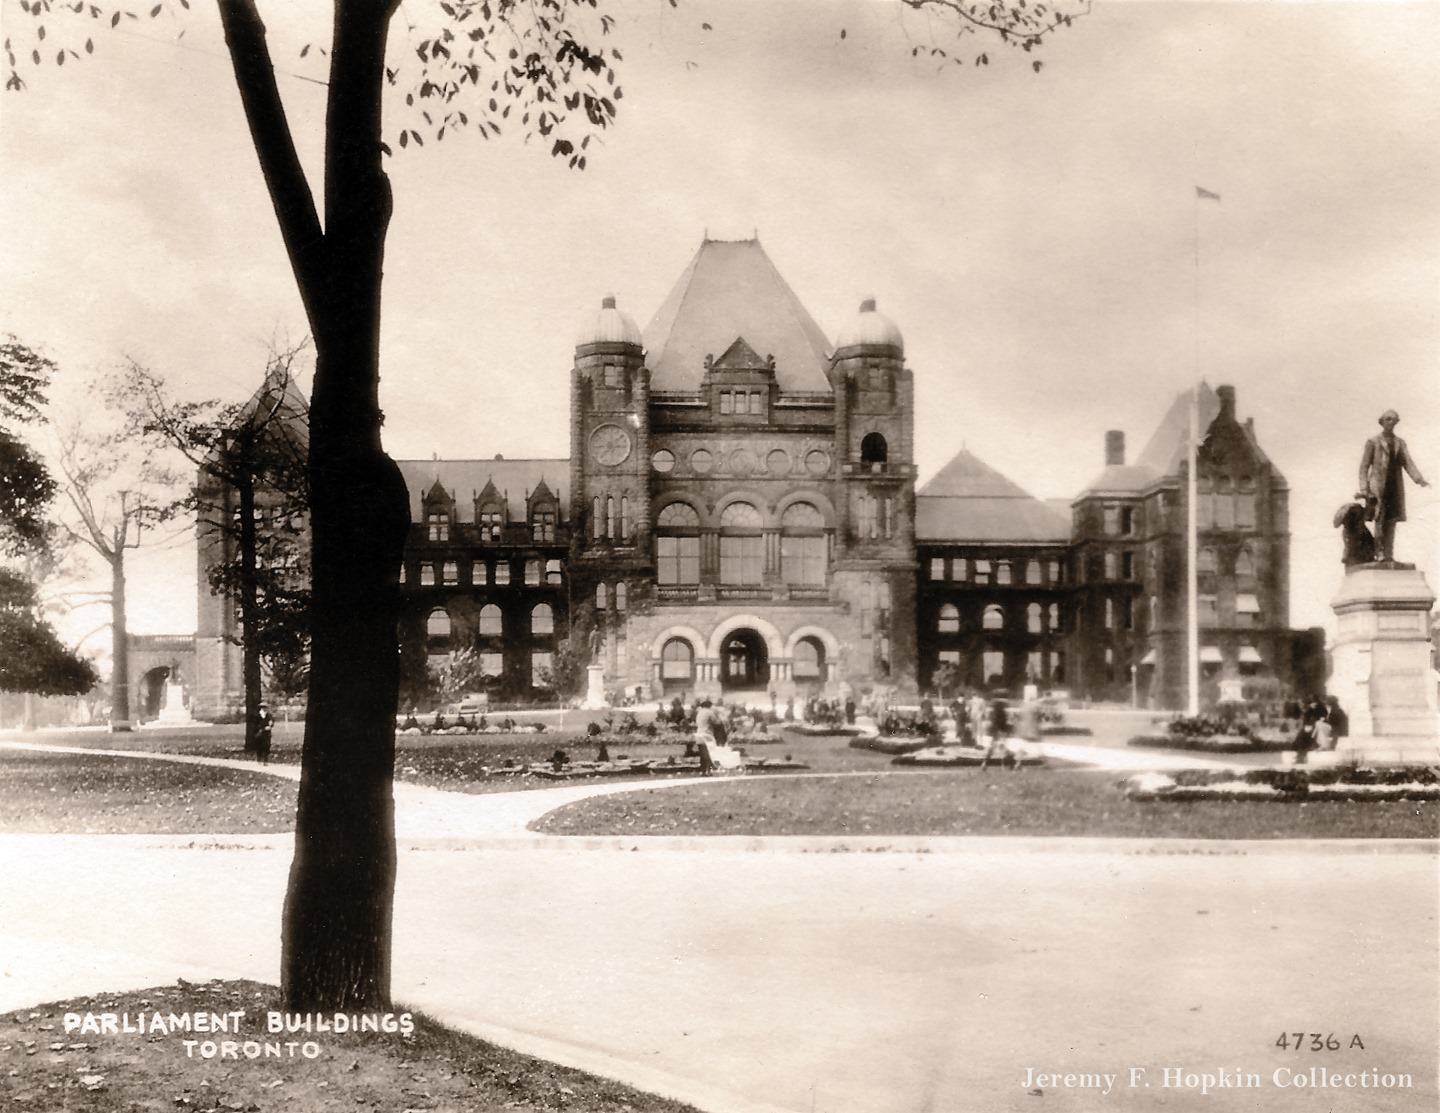 Parliament Buildings, Queen's Park, Toronto, 1920.